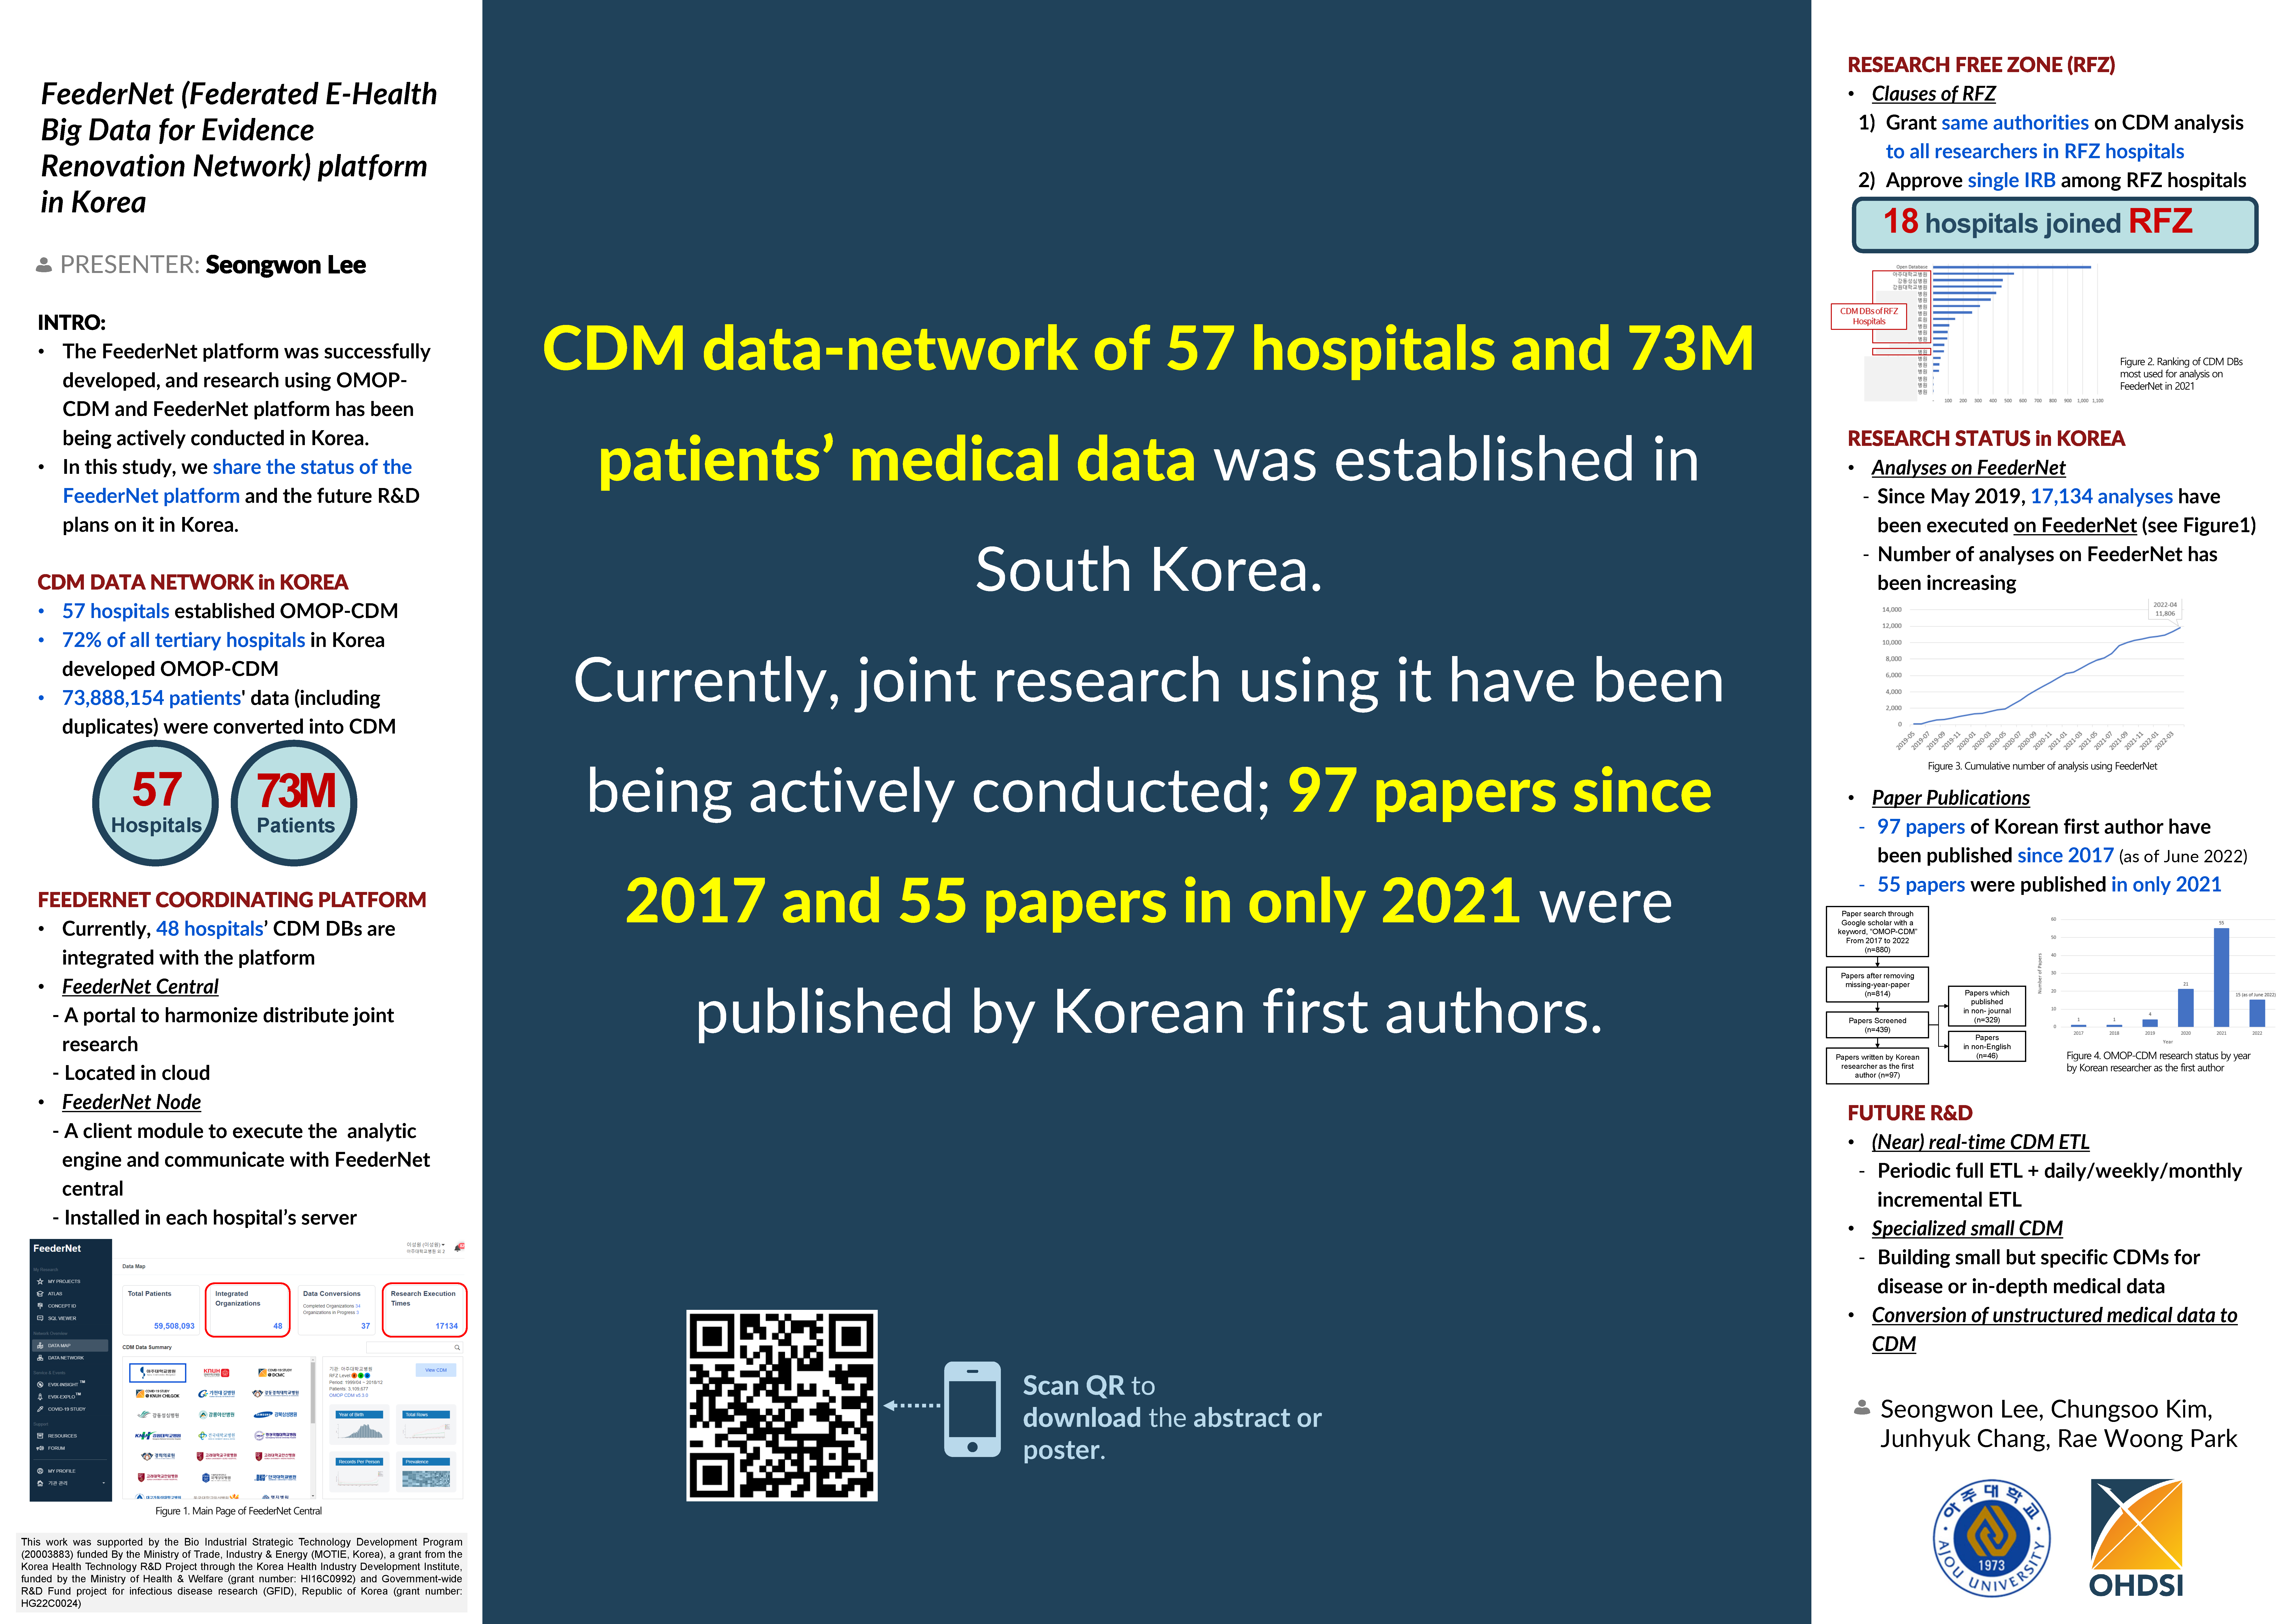 FeederNet (Federated E-Health Big Data for Evidence Renovation Network)  platform in Korea – OHDSI